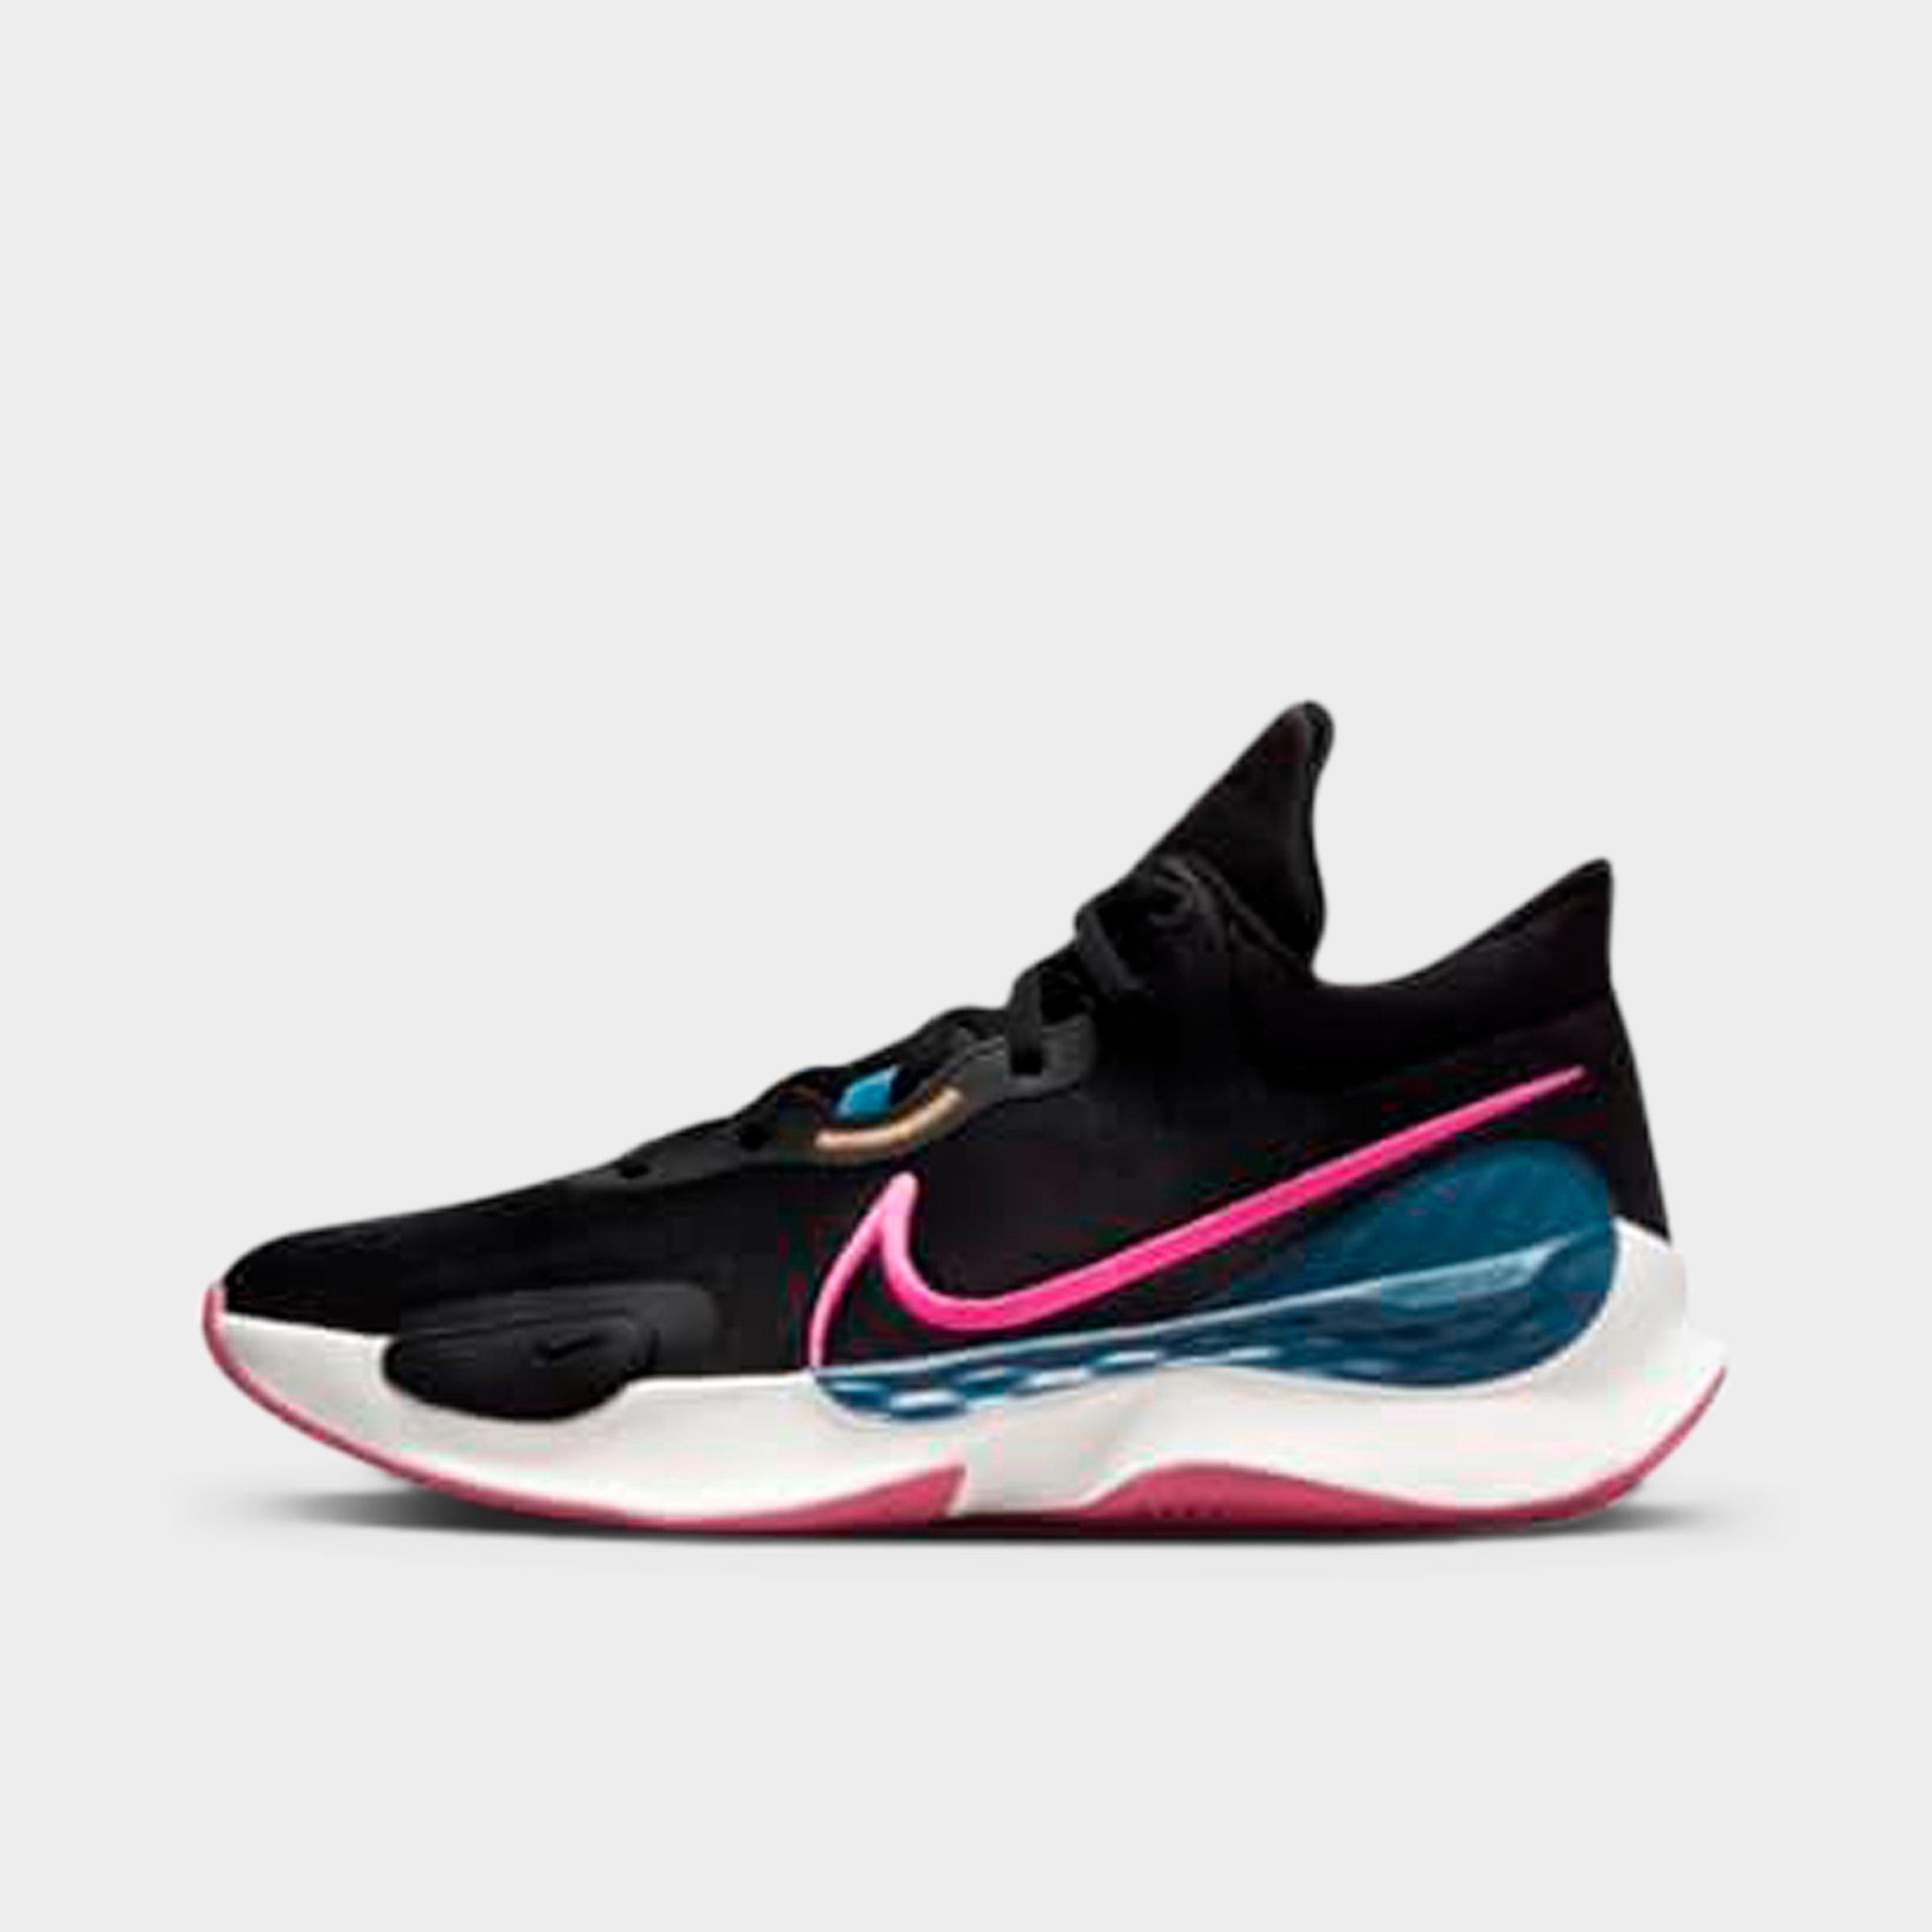 Nike Renew Elevate 3 Basketball Shoes Size 13.0 In Black/valerian Blue/desert Berry/pinksicle